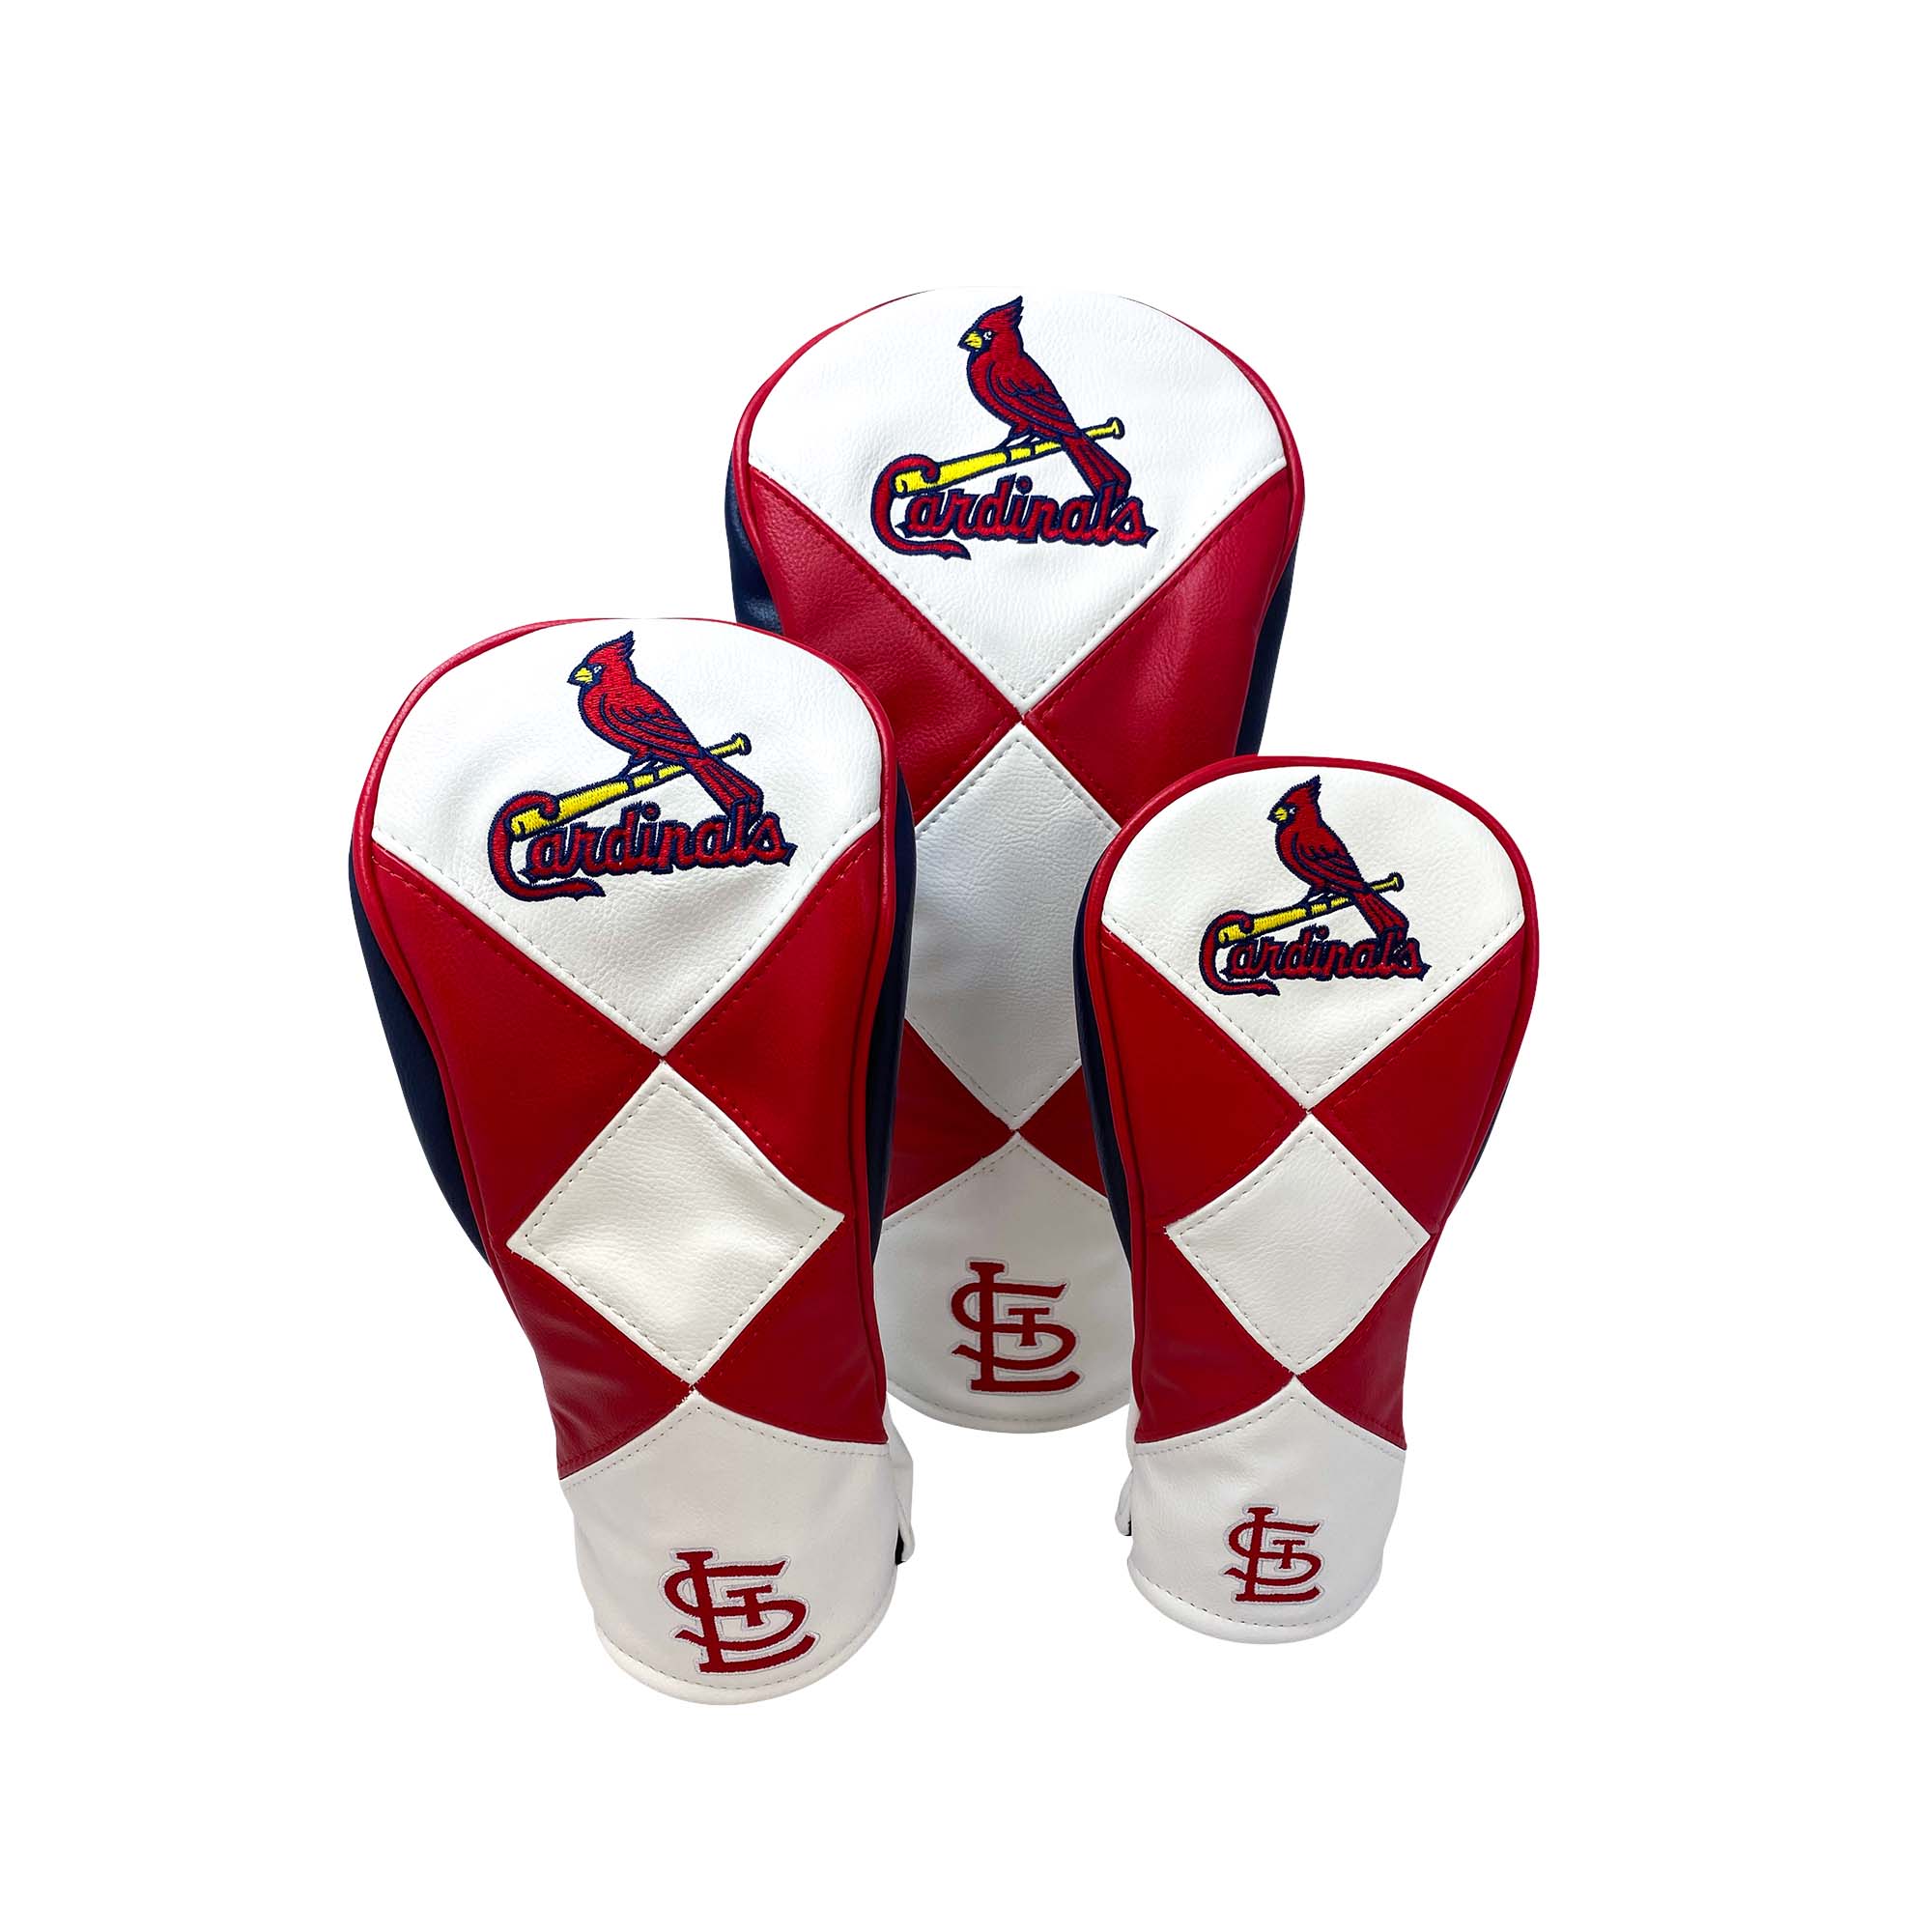 St. Louis Cardinals Embroidered Towel Golf Gift Set w/ Golf Balls